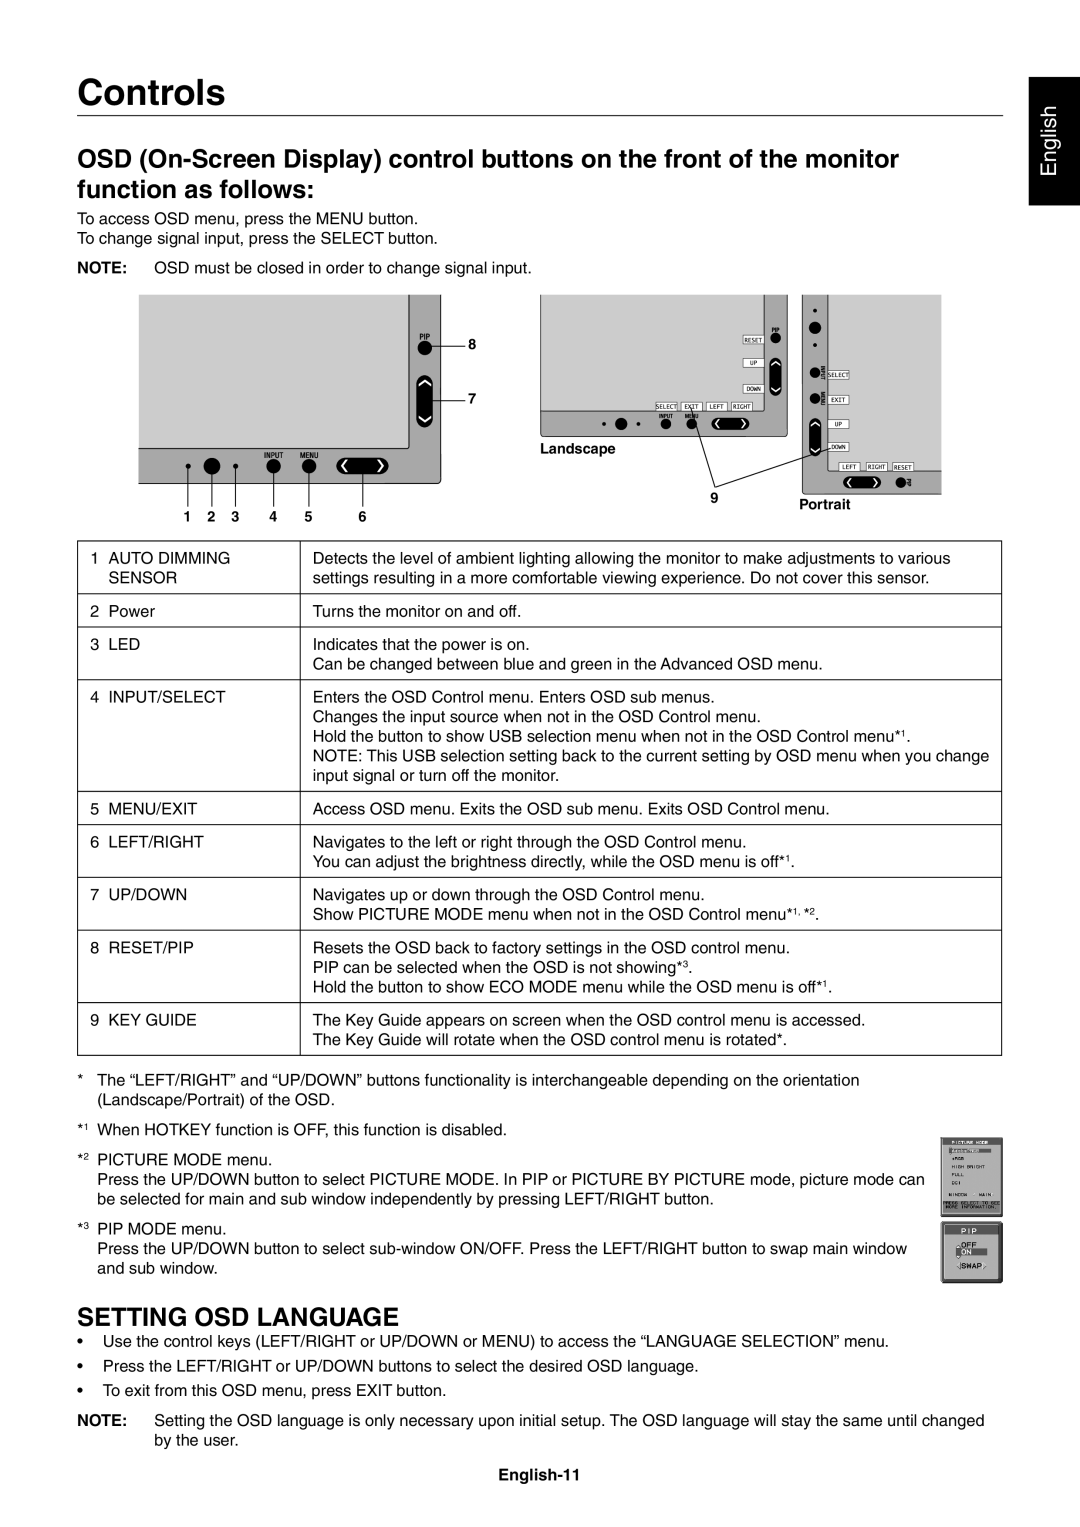 NEC PA242W user manual Controls, Setting Osd Language, English-11 